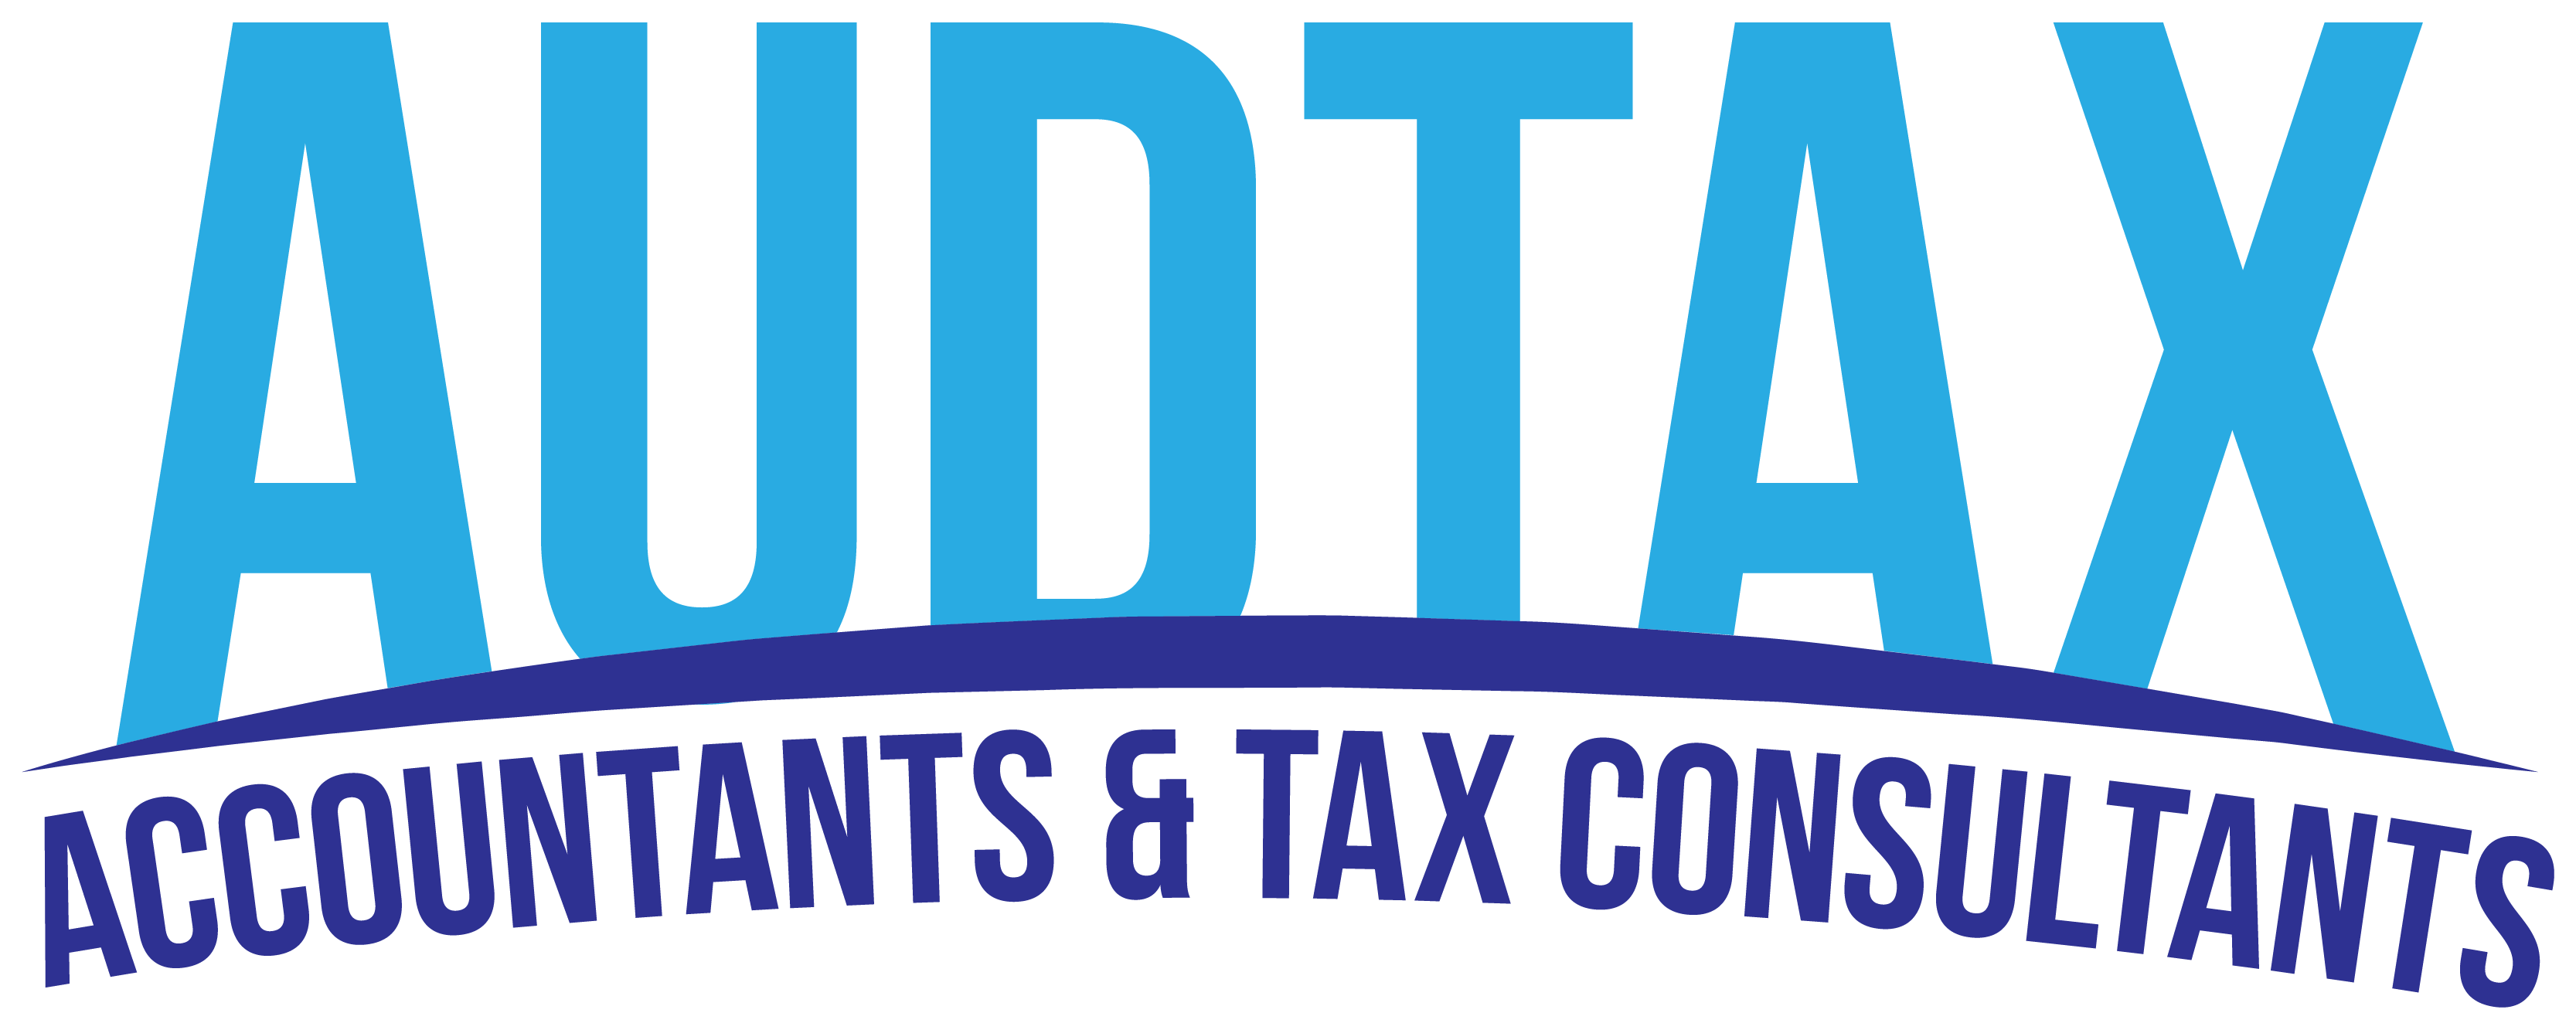 AudTax Accountants & Tax Consultants